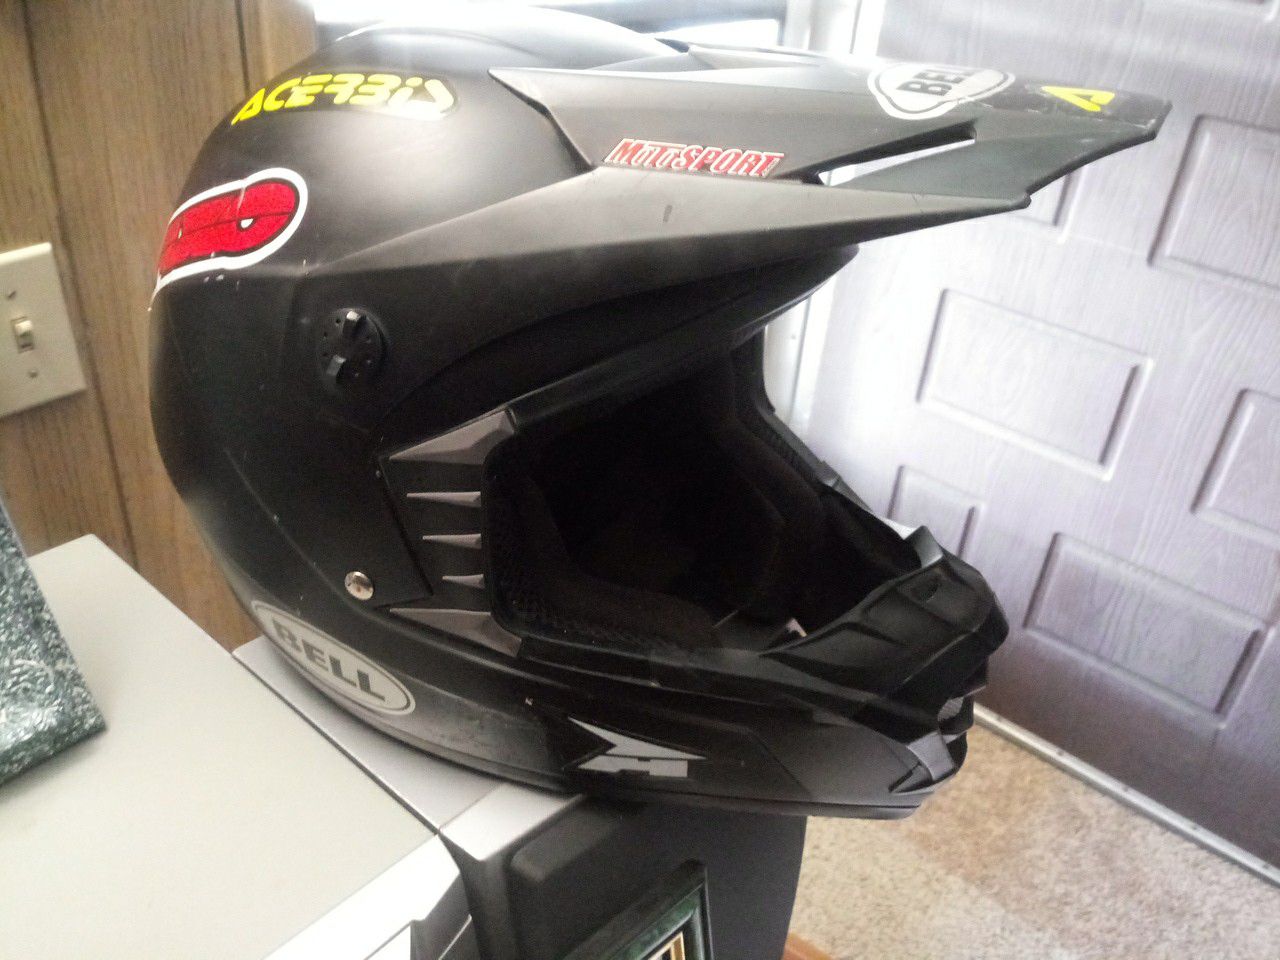 Bell sx1 motorcycle helmet!!!!side med 57/58cm